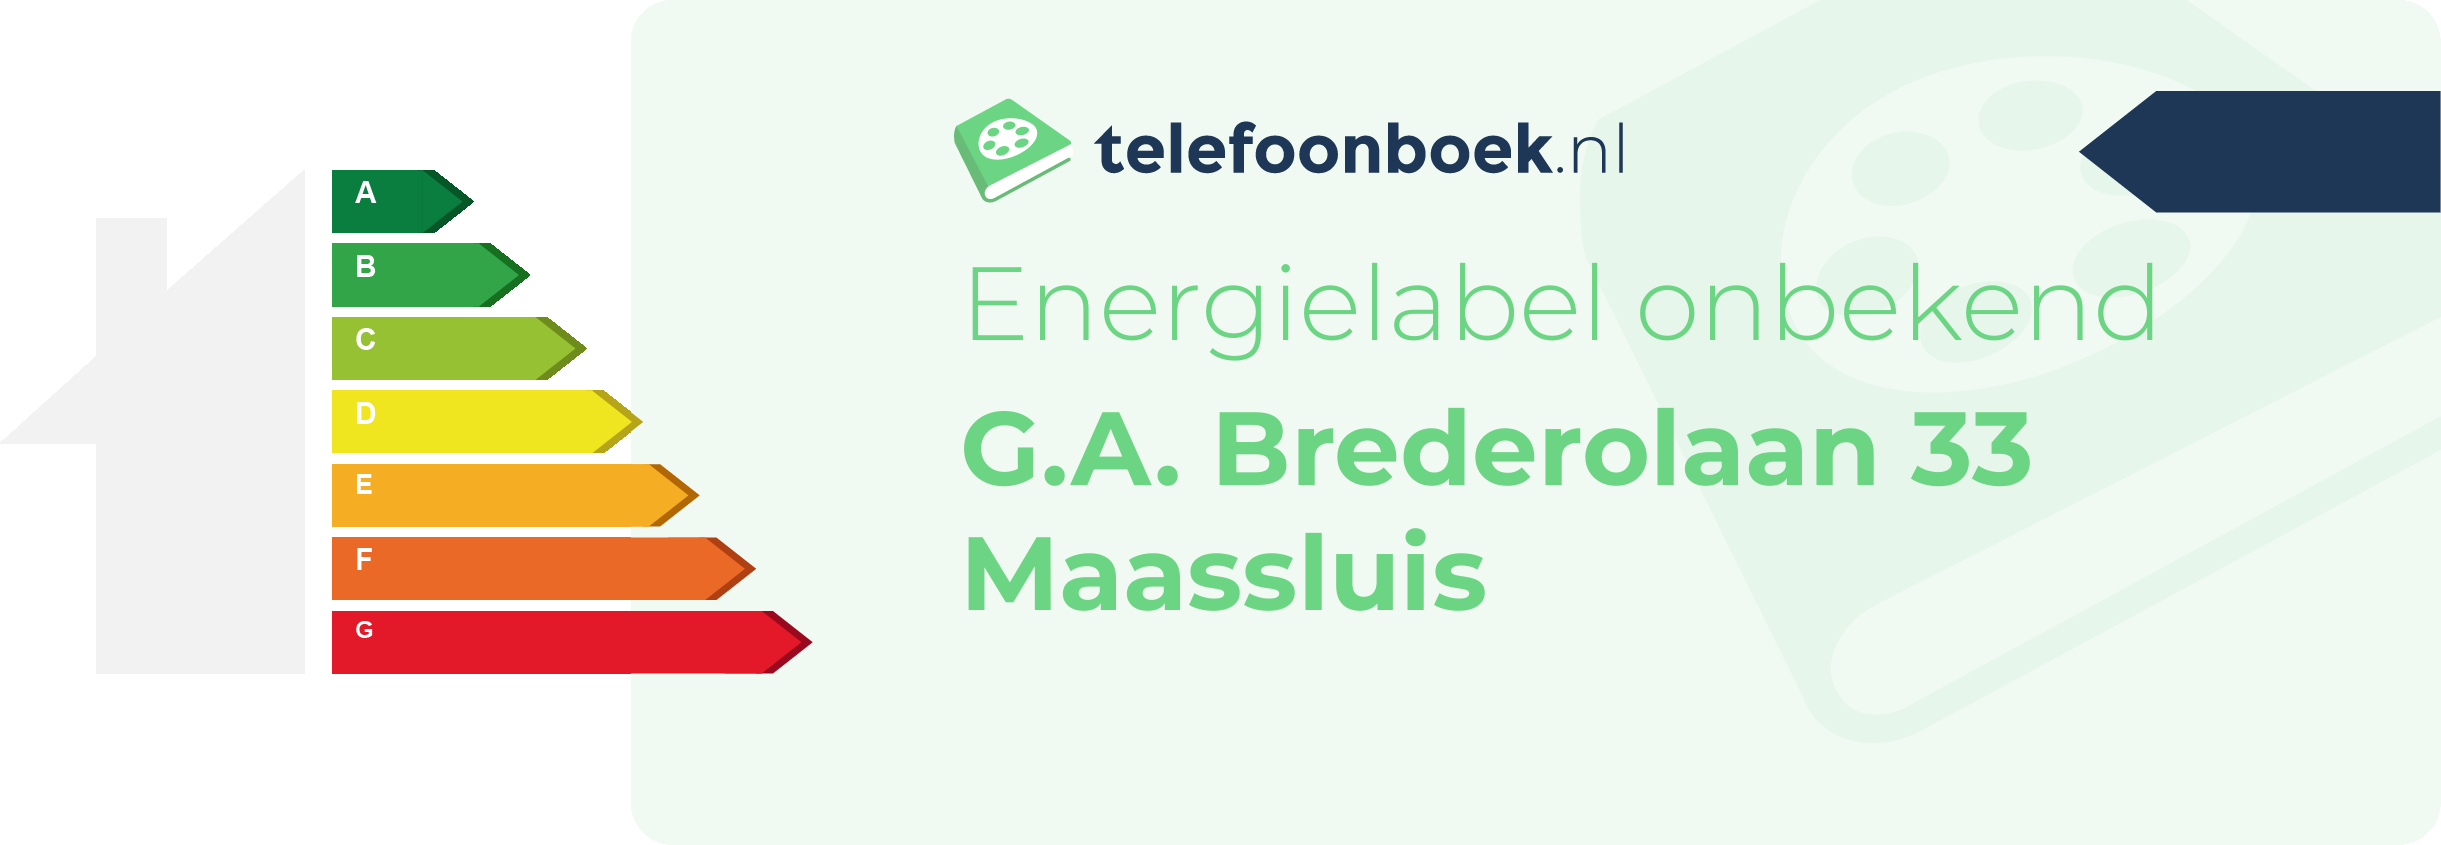 Energielabel G.A. Brederolaan 33 Maassluis